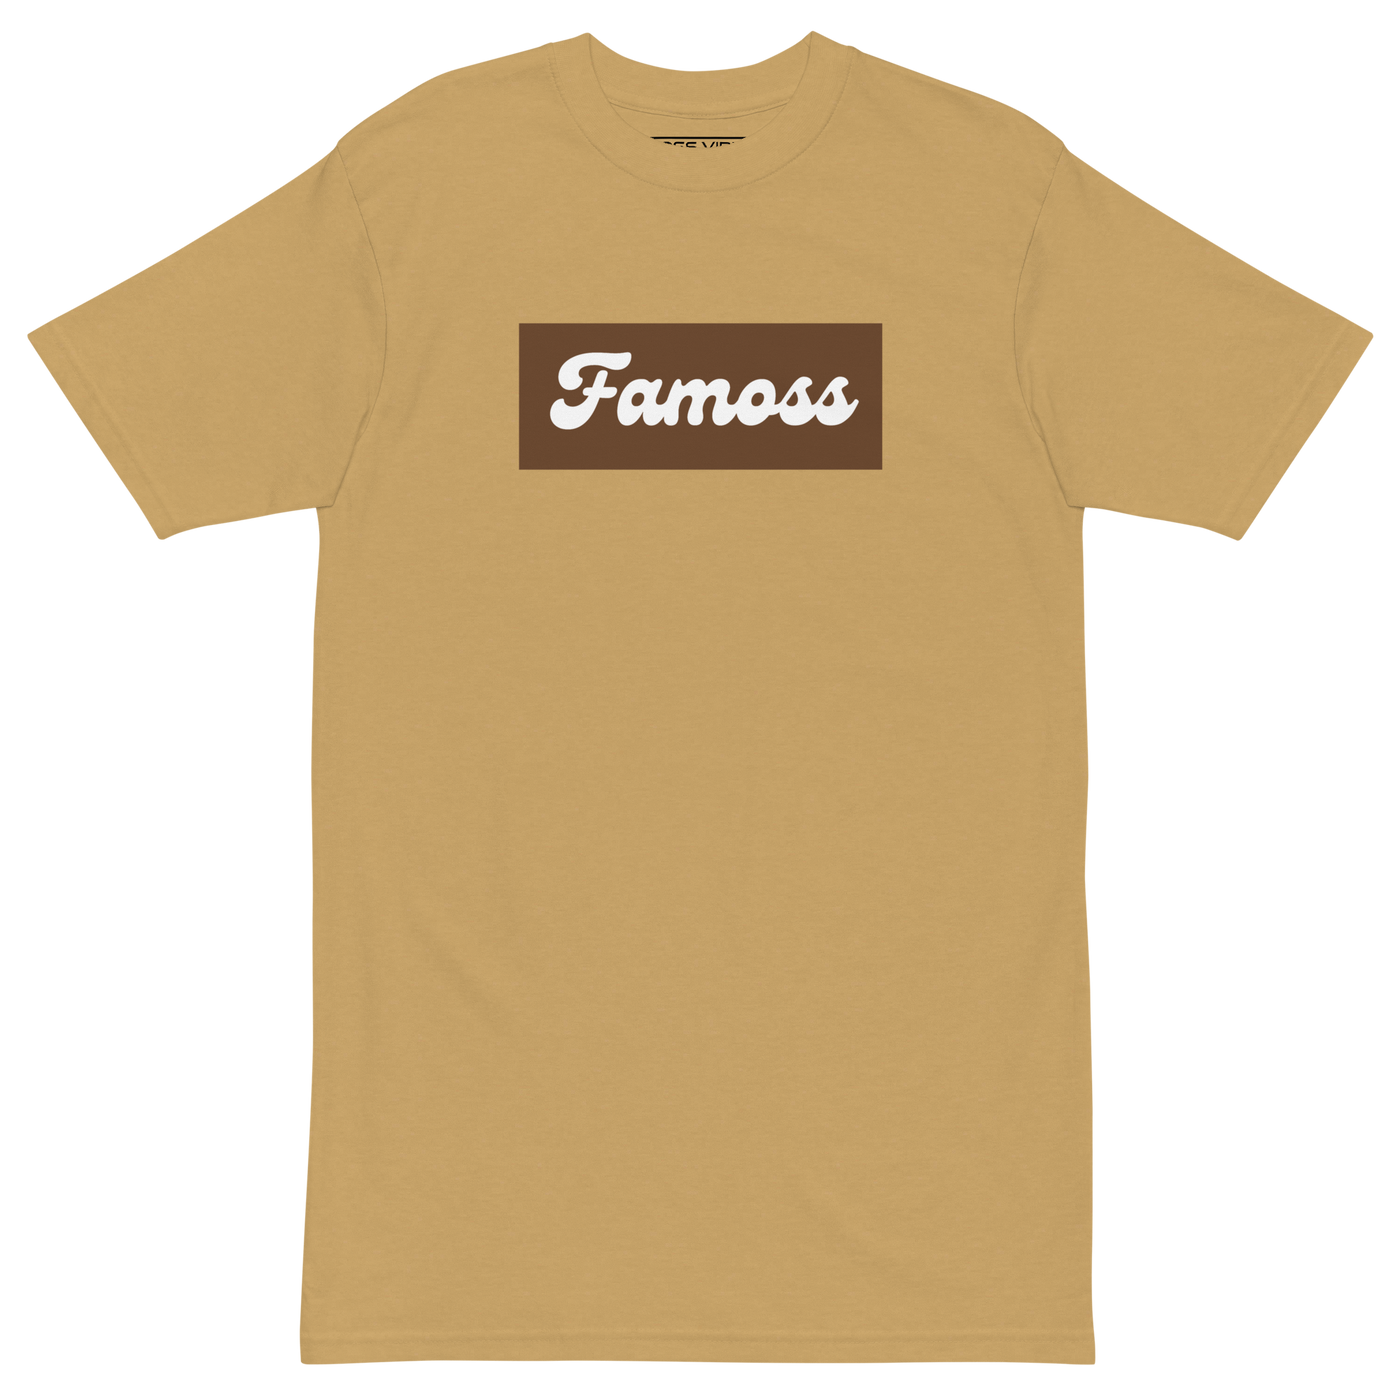 FAMOSS - T-SHIRT (VINTAGE GOLD)